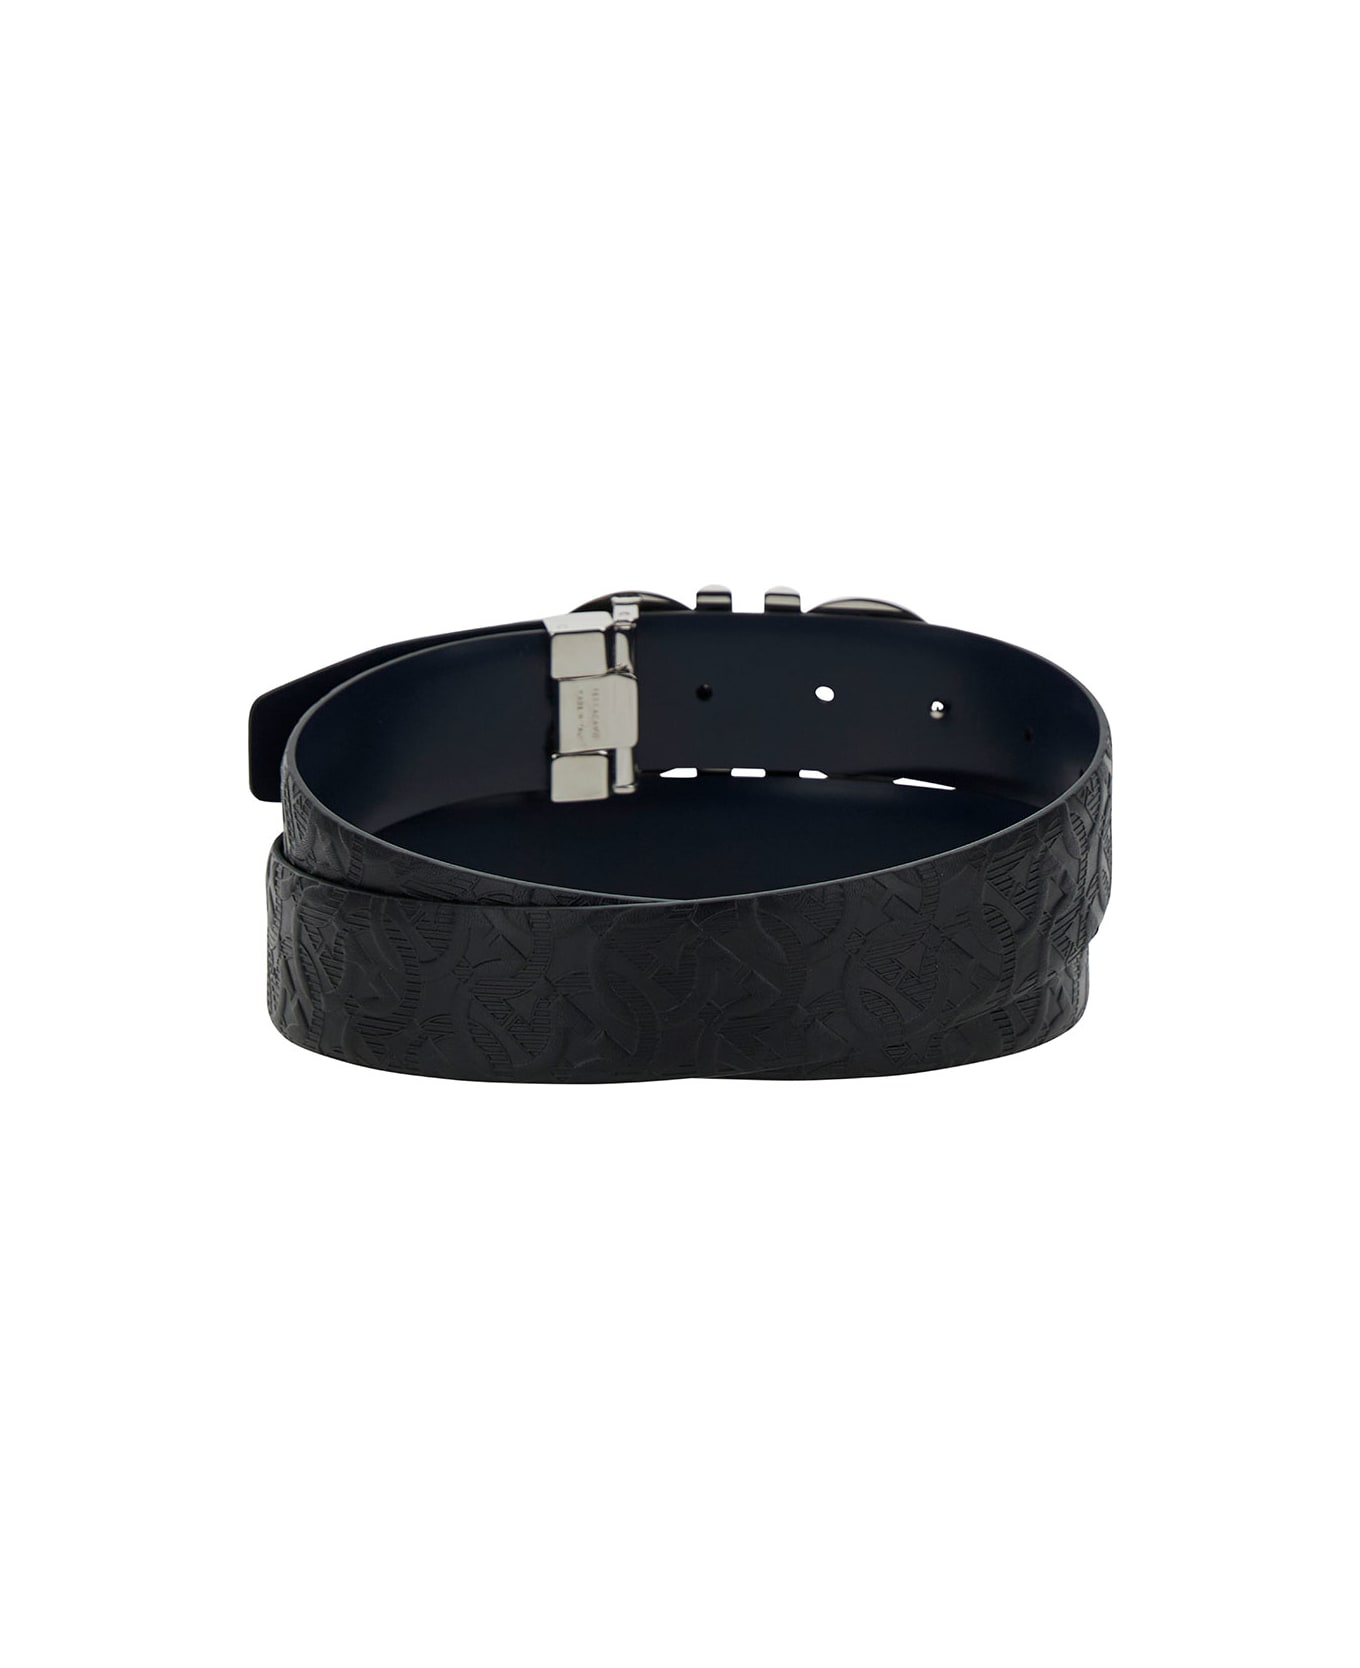 Ferragamo Black Leather Belt With Logo Buckle - Black